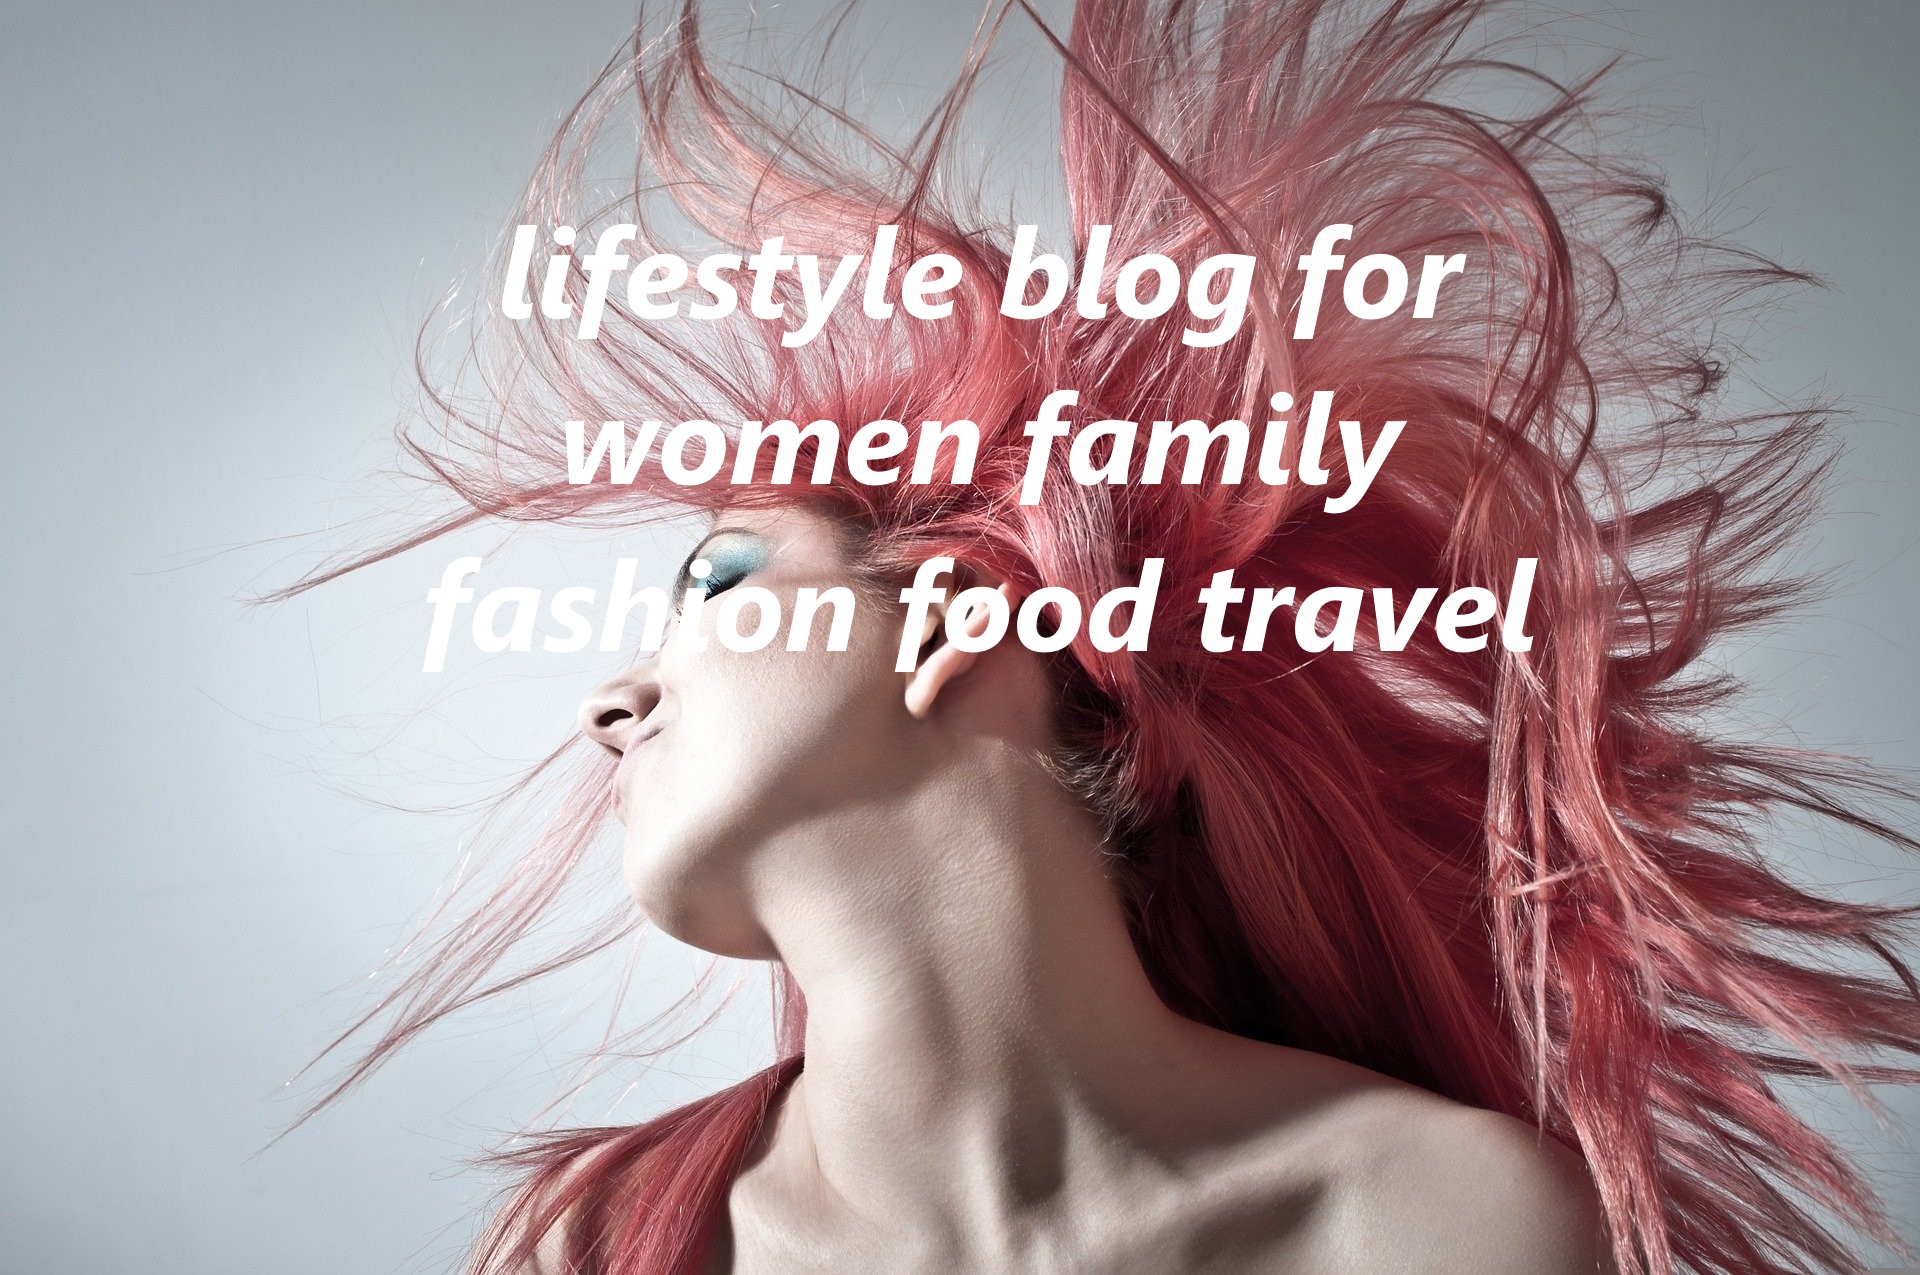 Lifestyle Blog For Women Family Fashion Food Travel